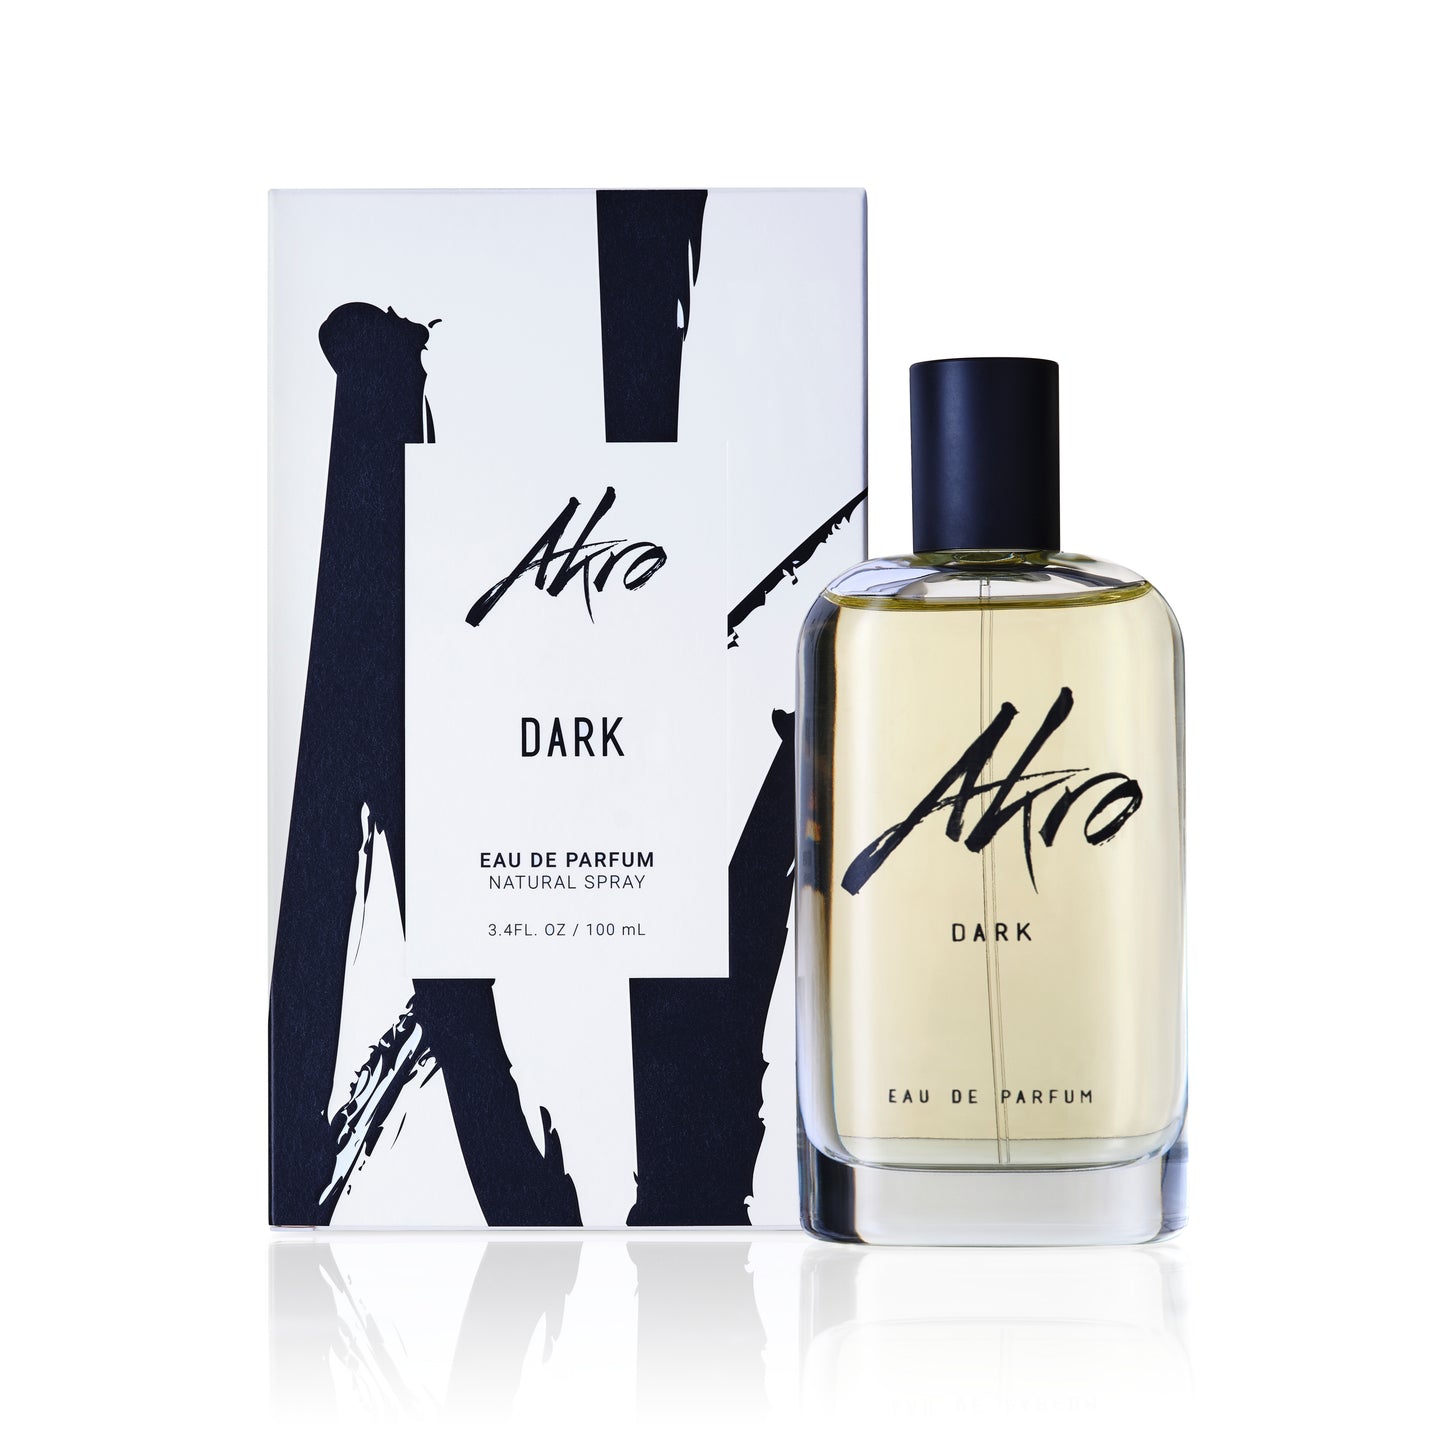 Dark EDP Akro Fragrances